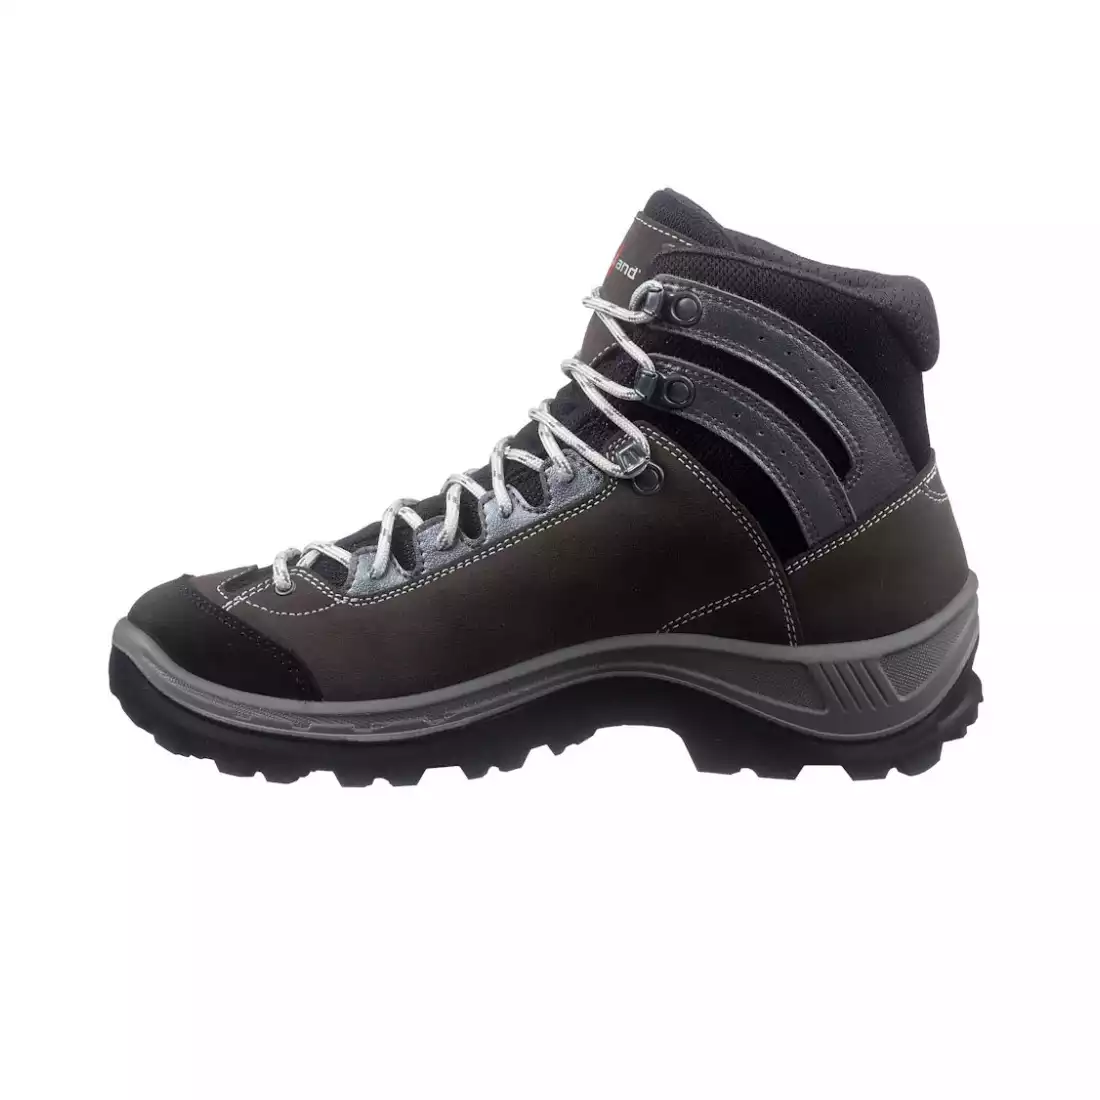 KAYLAND IMPACT GTX Pantofi de trekking pentru bărbați, GORE-TEX, VIBRAM, gri